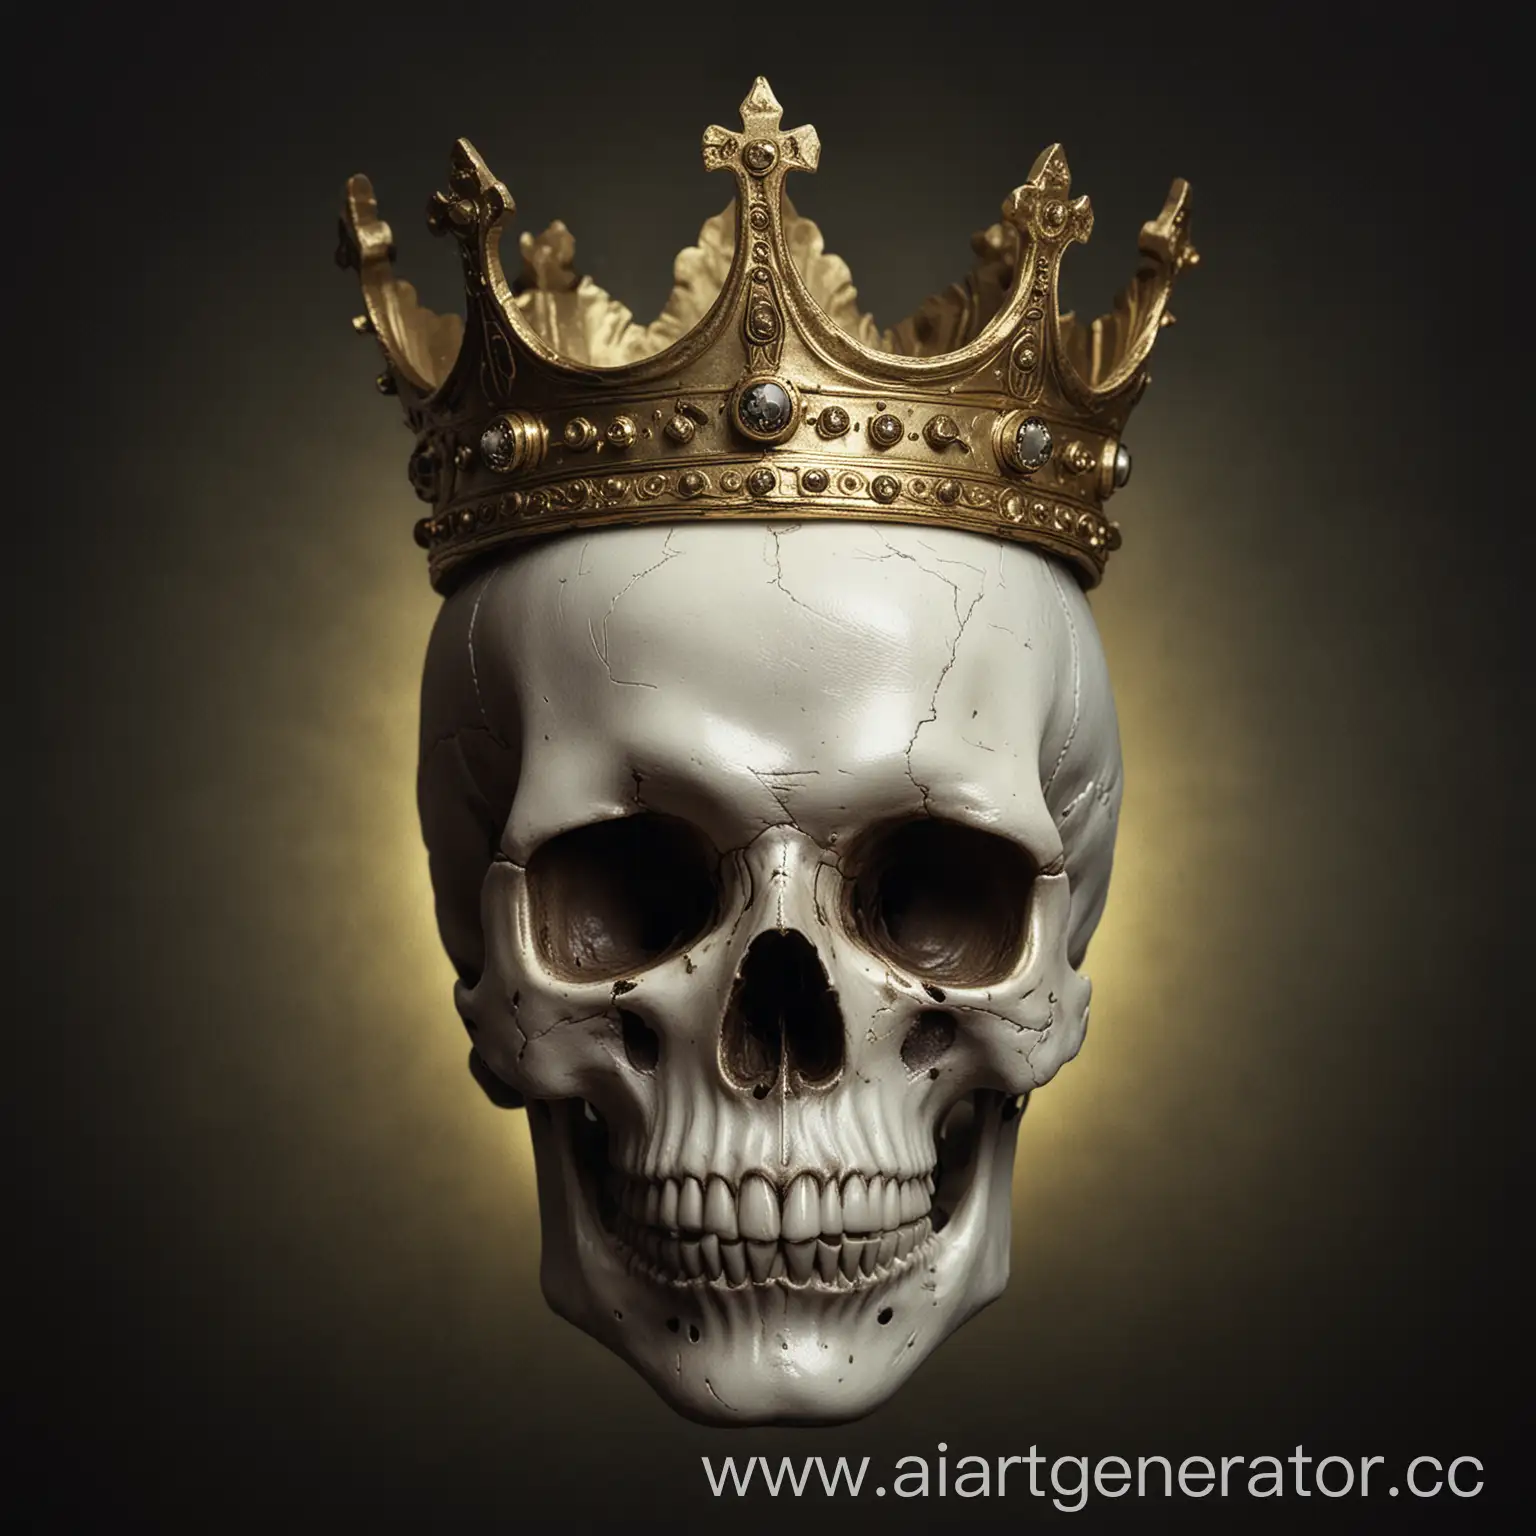 Golden-Crowned-Skull-on-Dark-Background